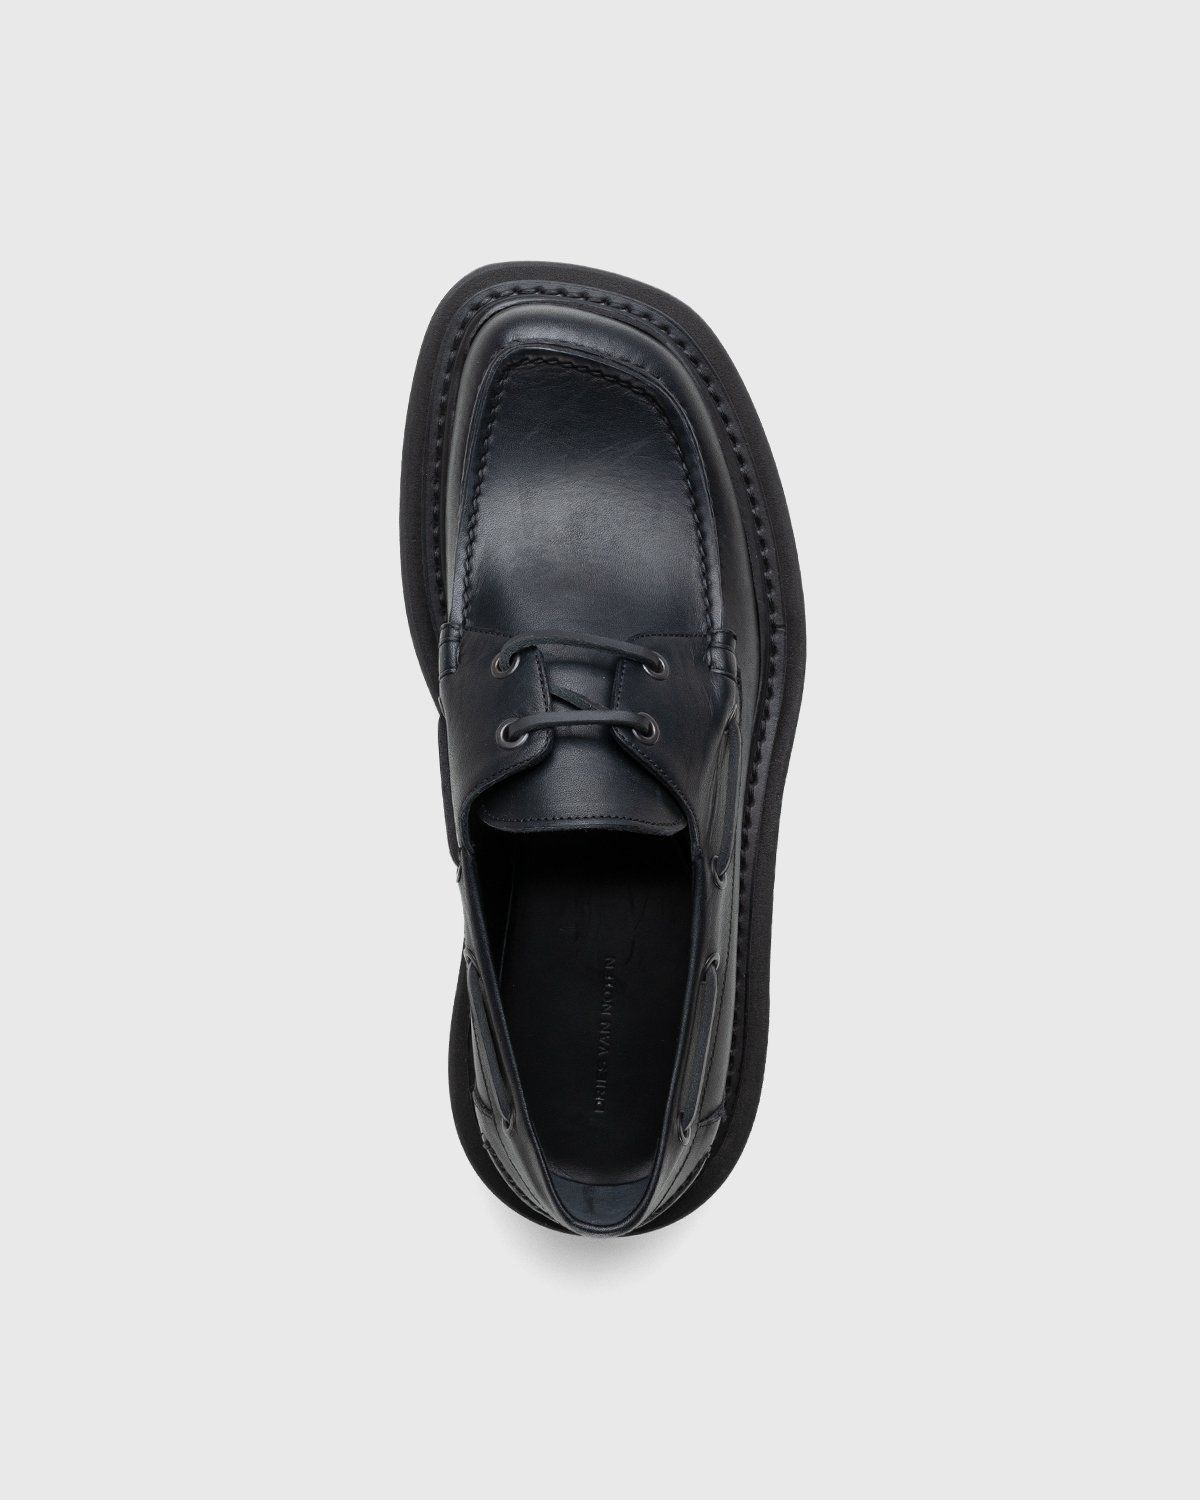 Dries van Noten – Leather Boat Shoe Black - Boat Shoes & Moccasins - Black - Image 5